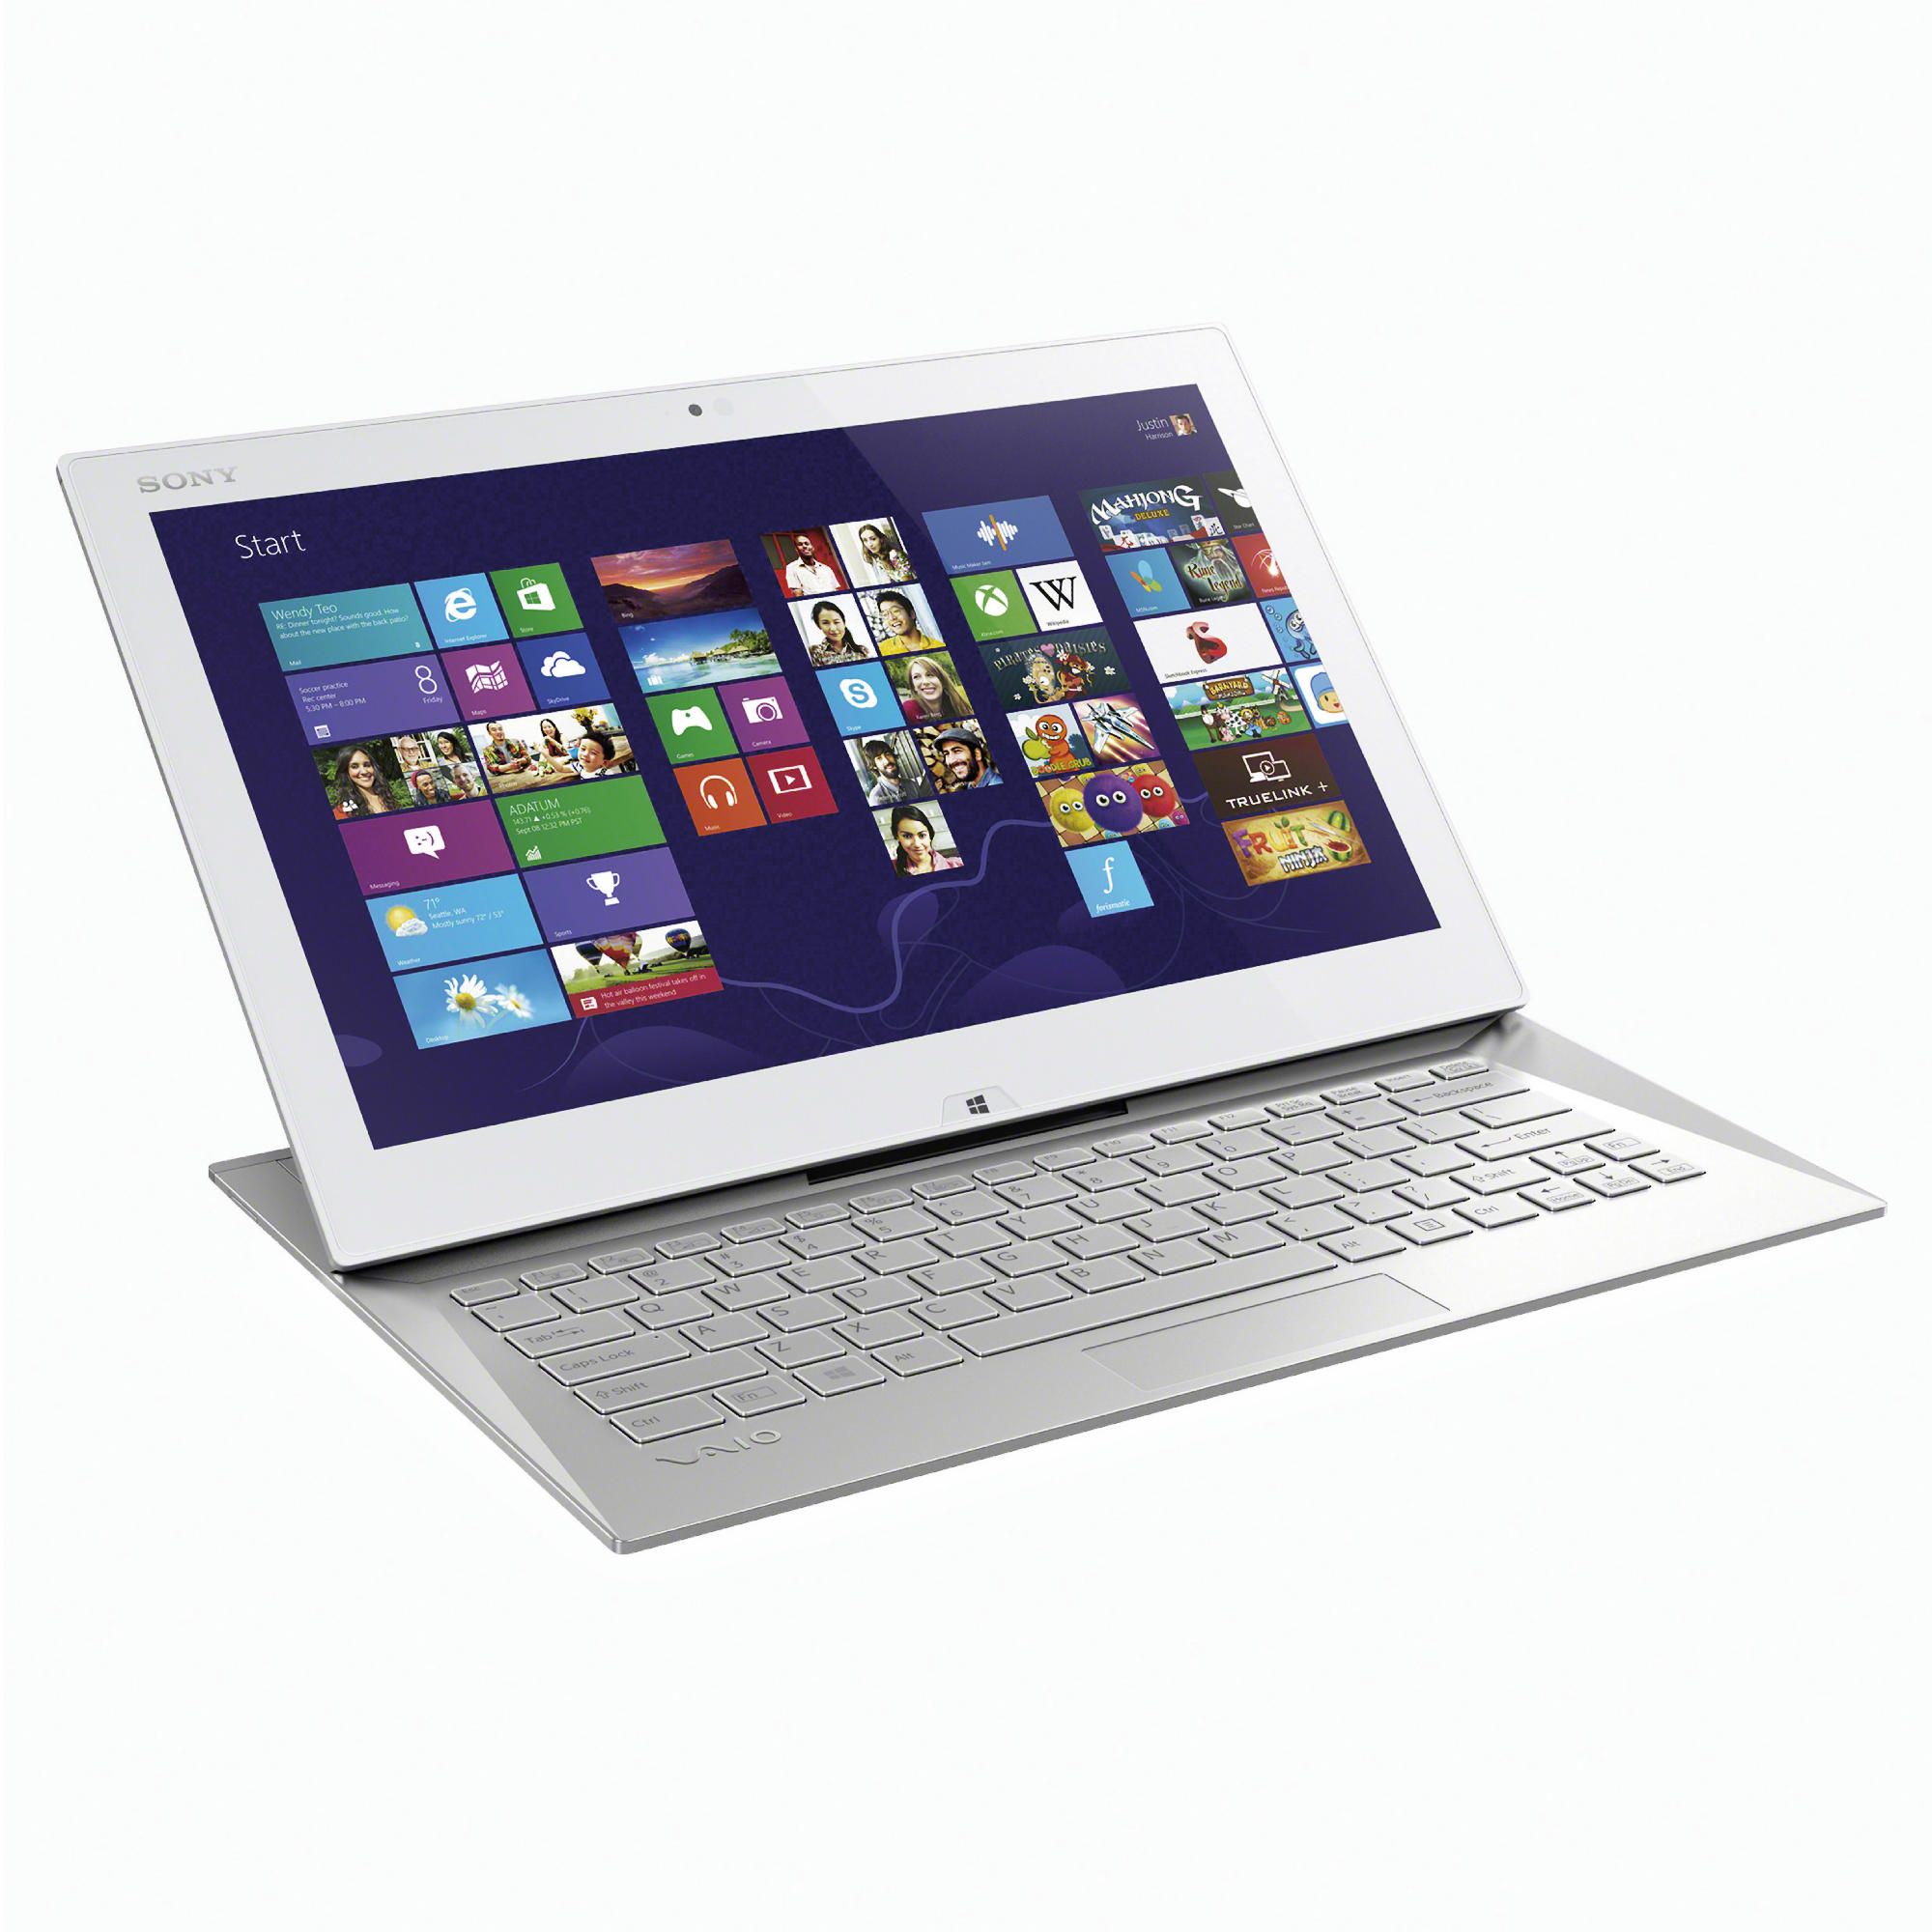 Sony Vaio Duo 13.3 inch Notebook, Intel Core i7, 4GB RAM, 128GB, Windows 8, White